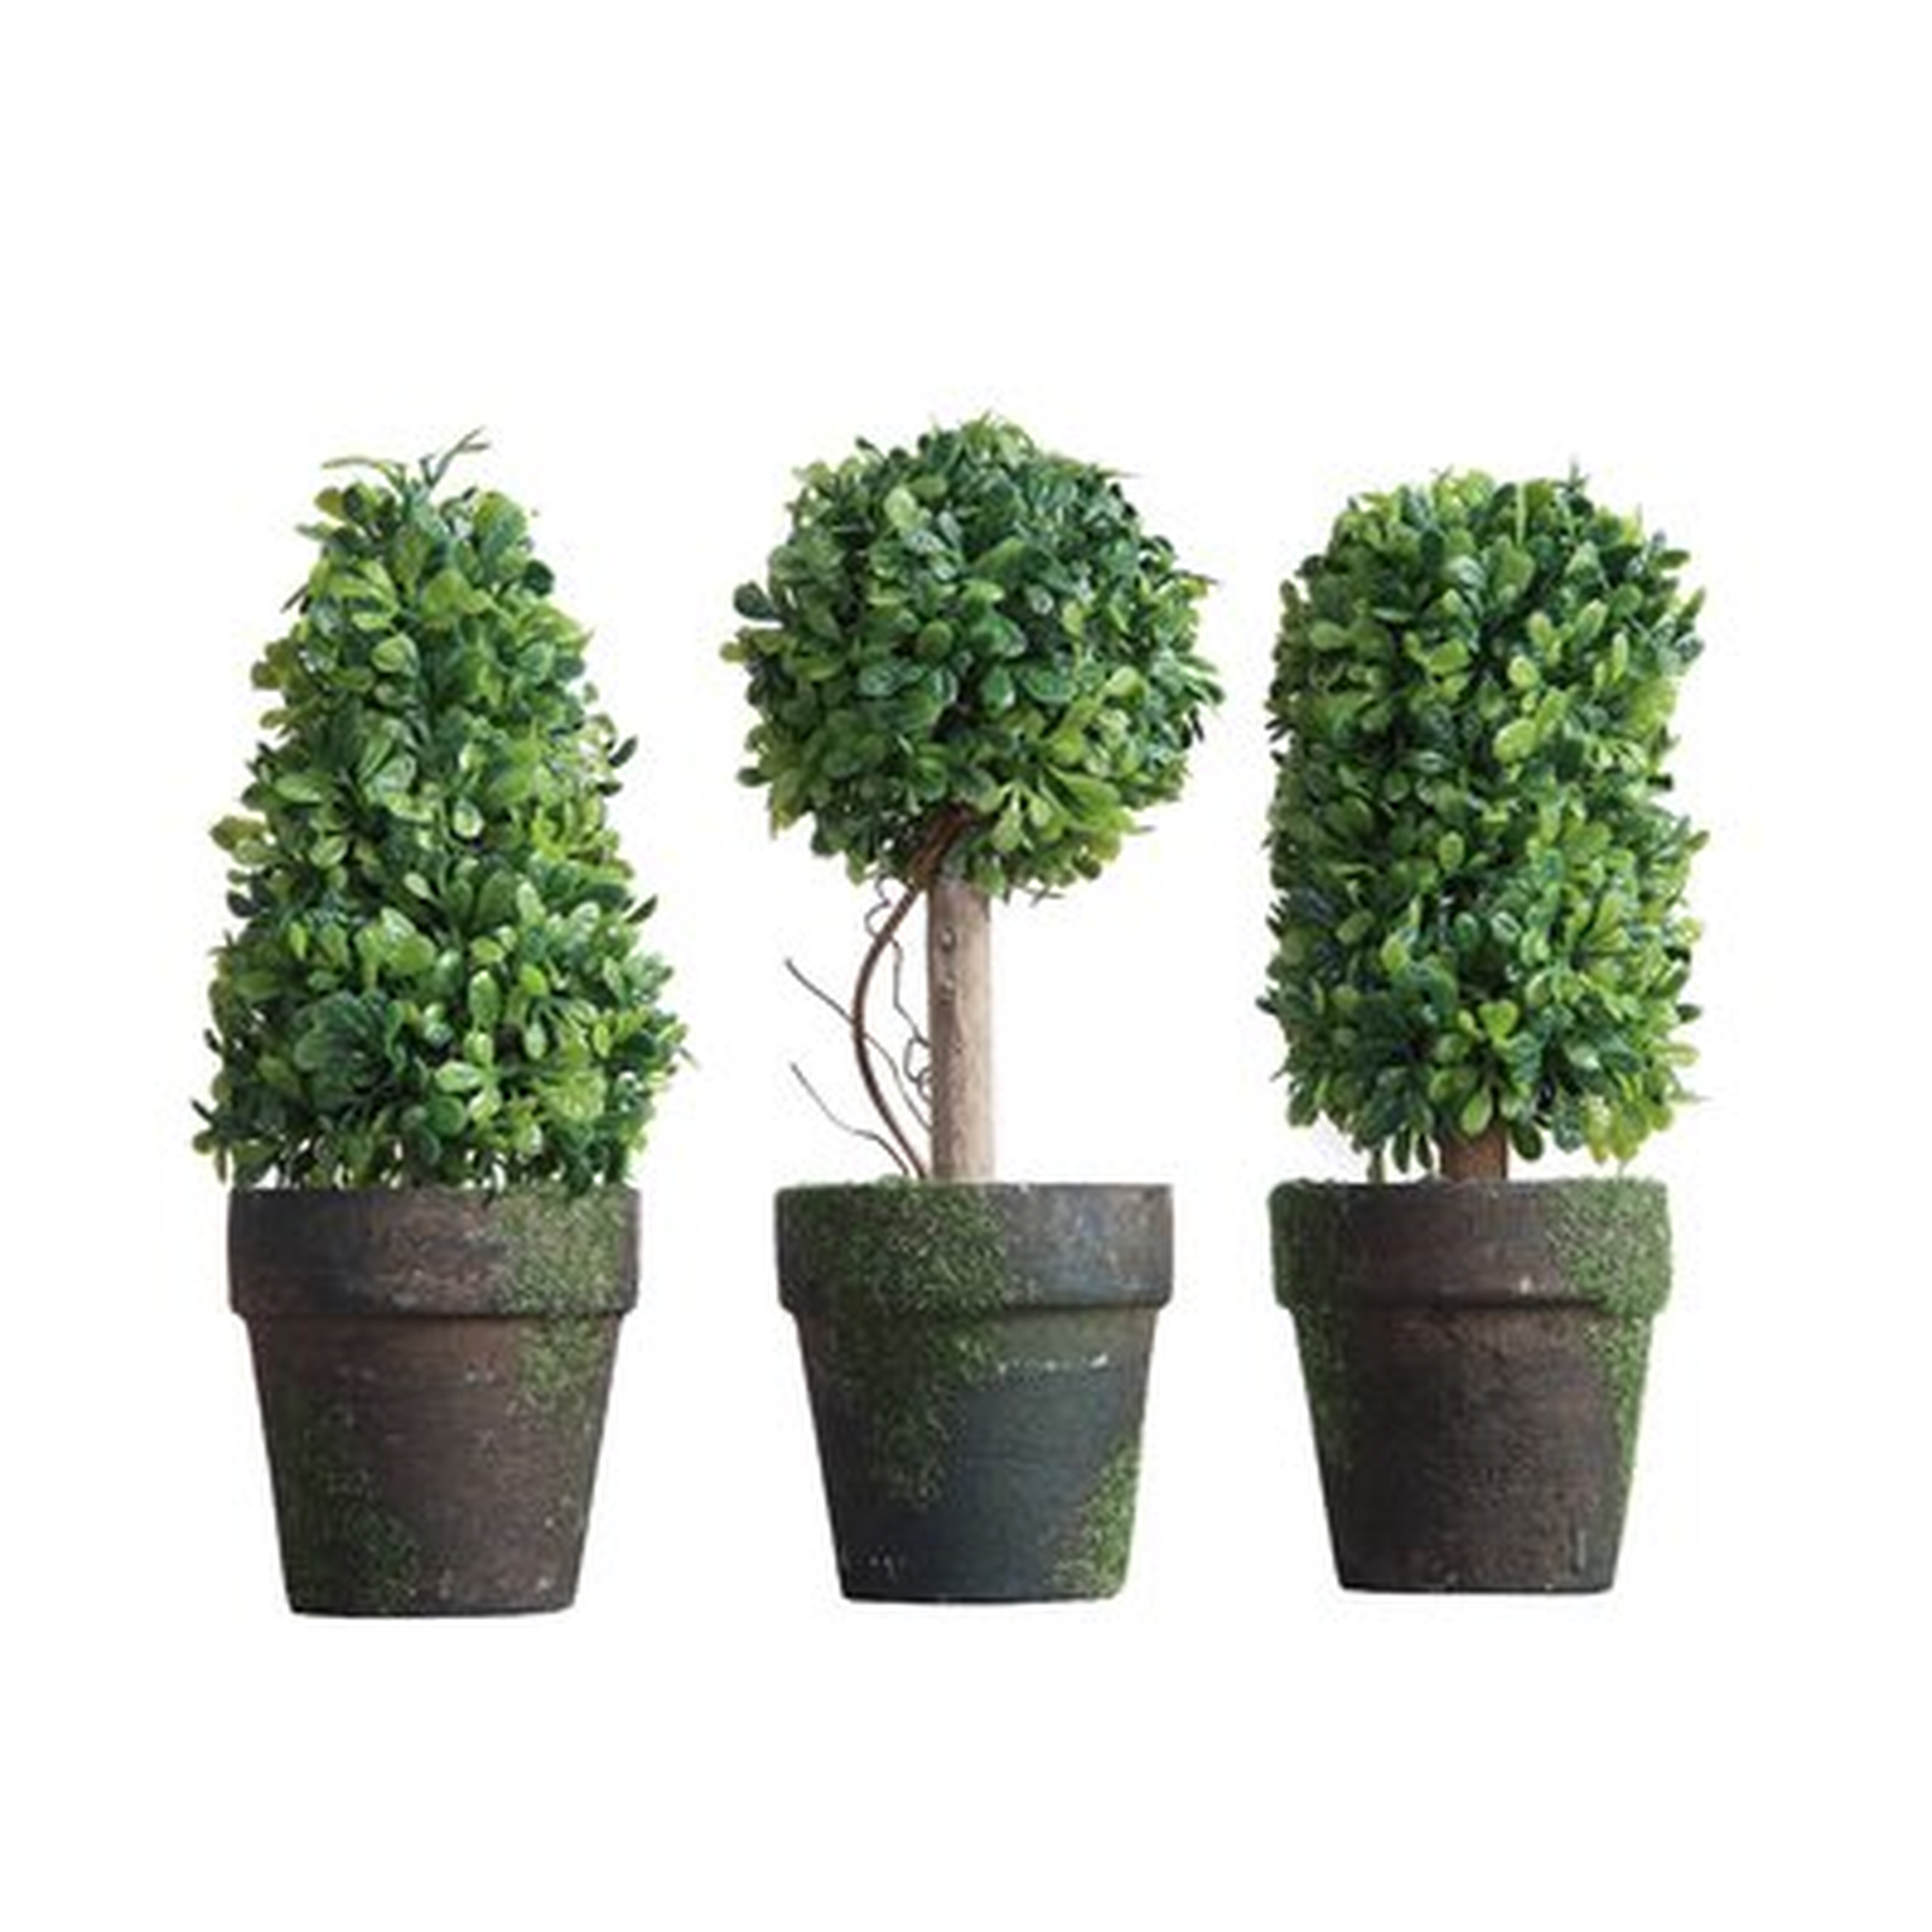 3 Piece Faux Topiary in Pot Set - Wayfair